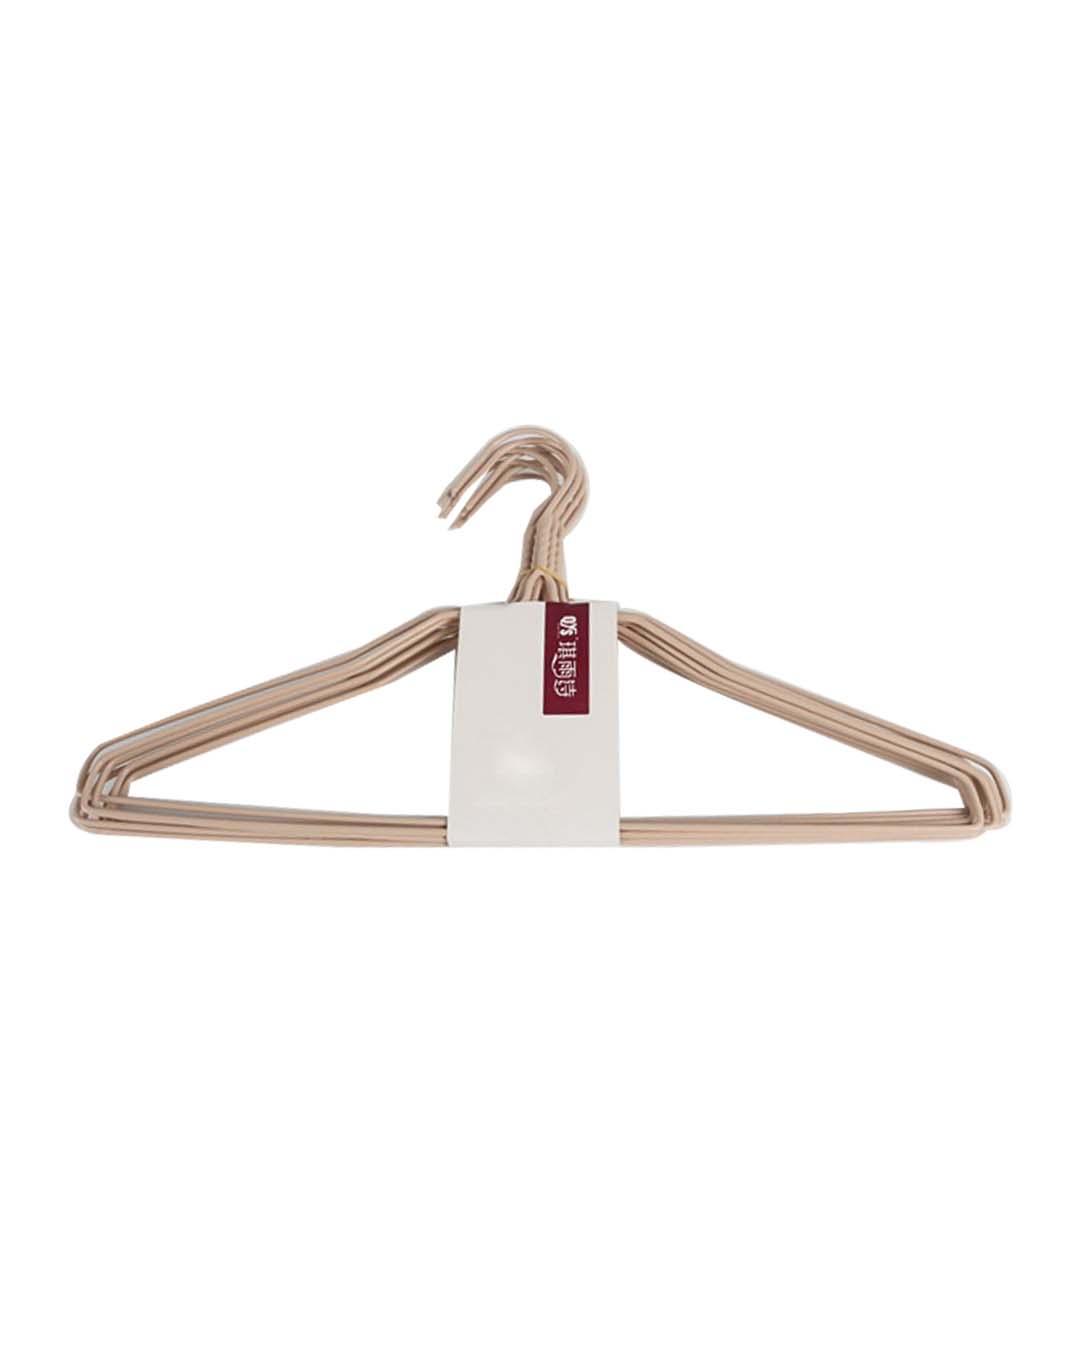 Cloth Hangers, Peach, Plastic, Set of 10 - MARKET 99